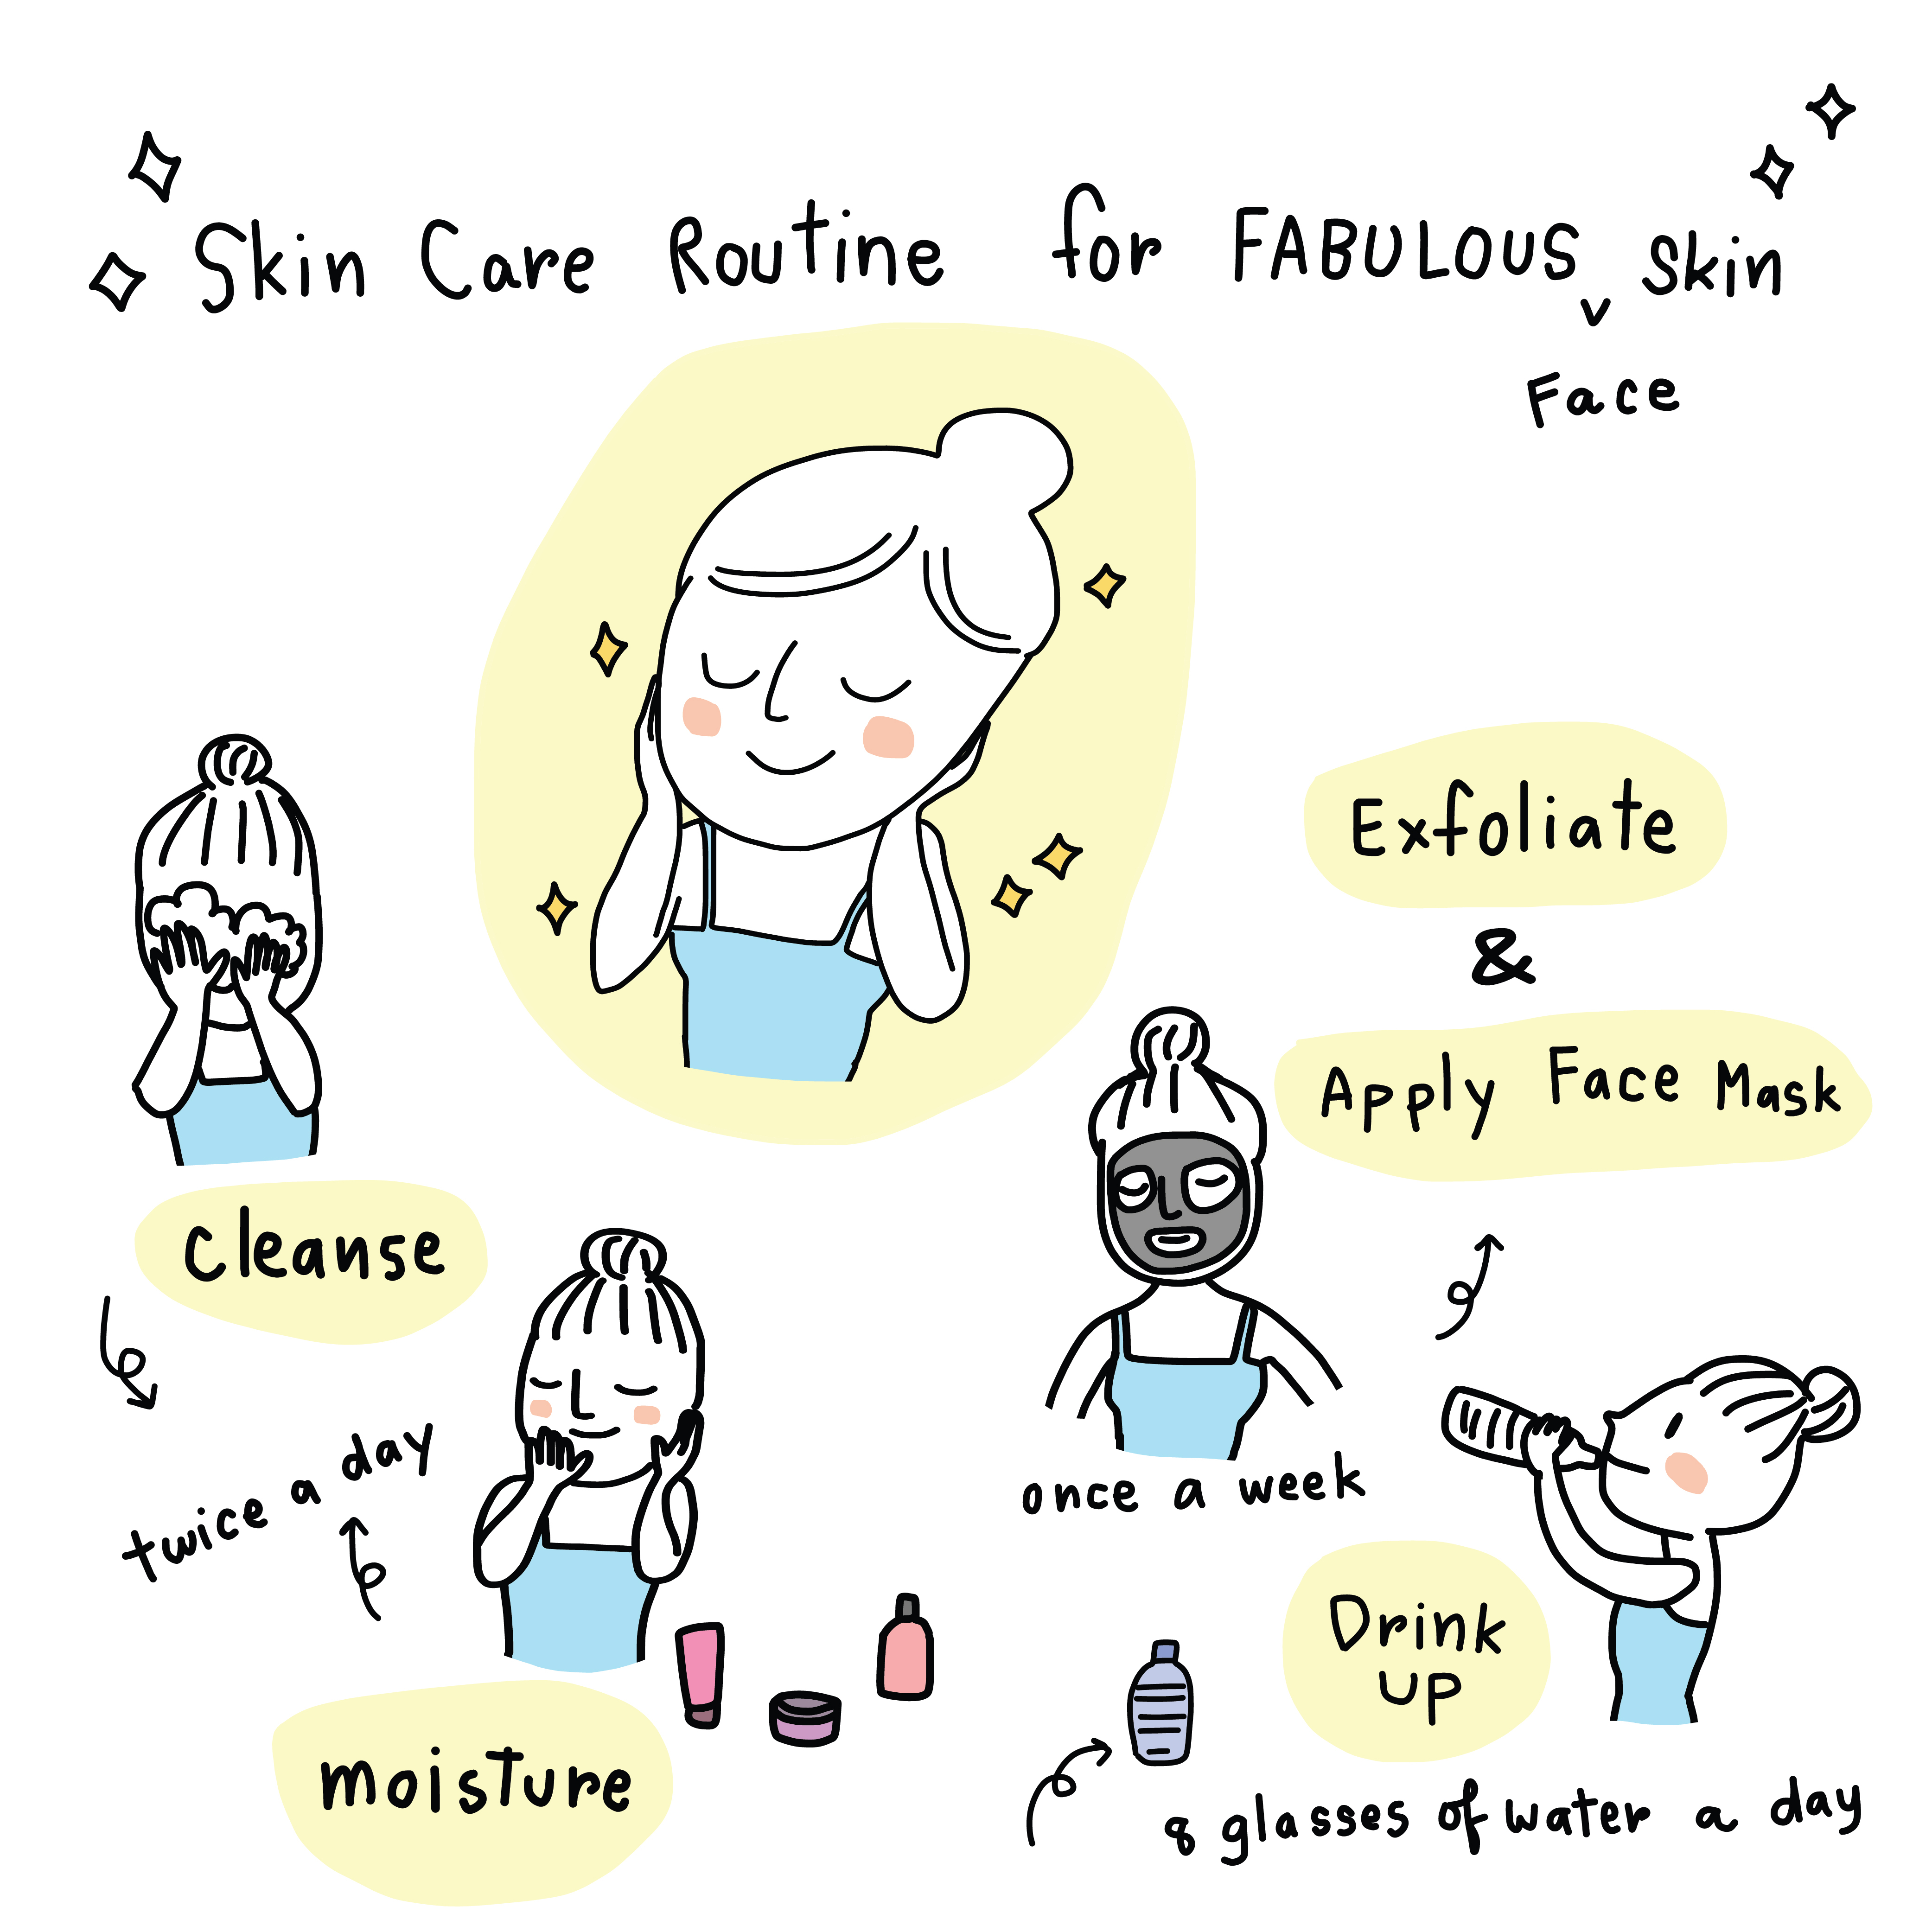 Skincare routine